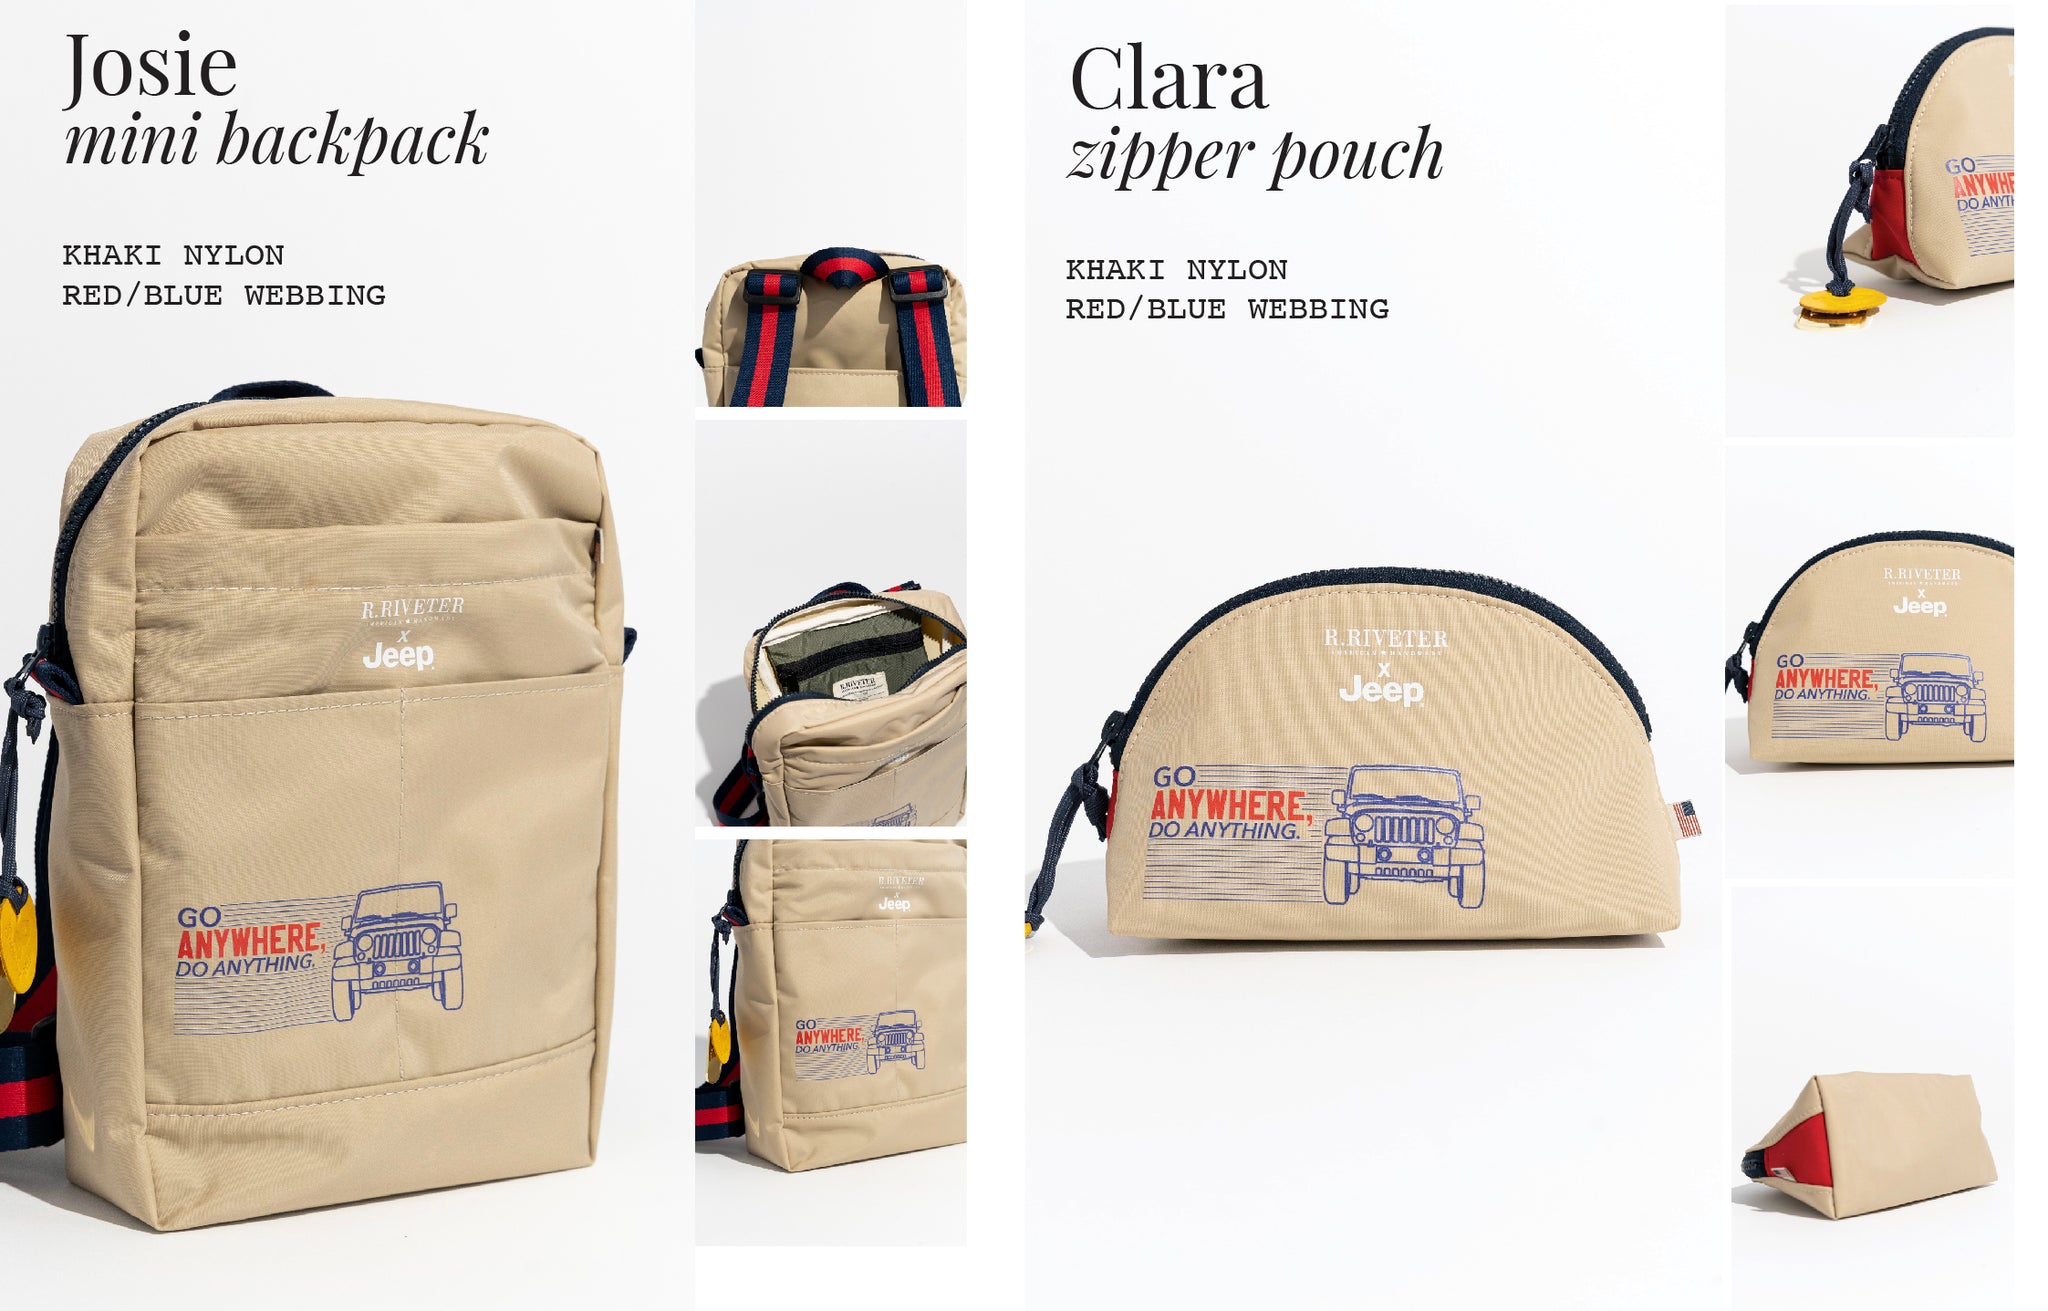 Mini Josie Khaki backpack & Clara Zipper Pouch Khaki Backpack- R.Riveter x Jeep Collaboration